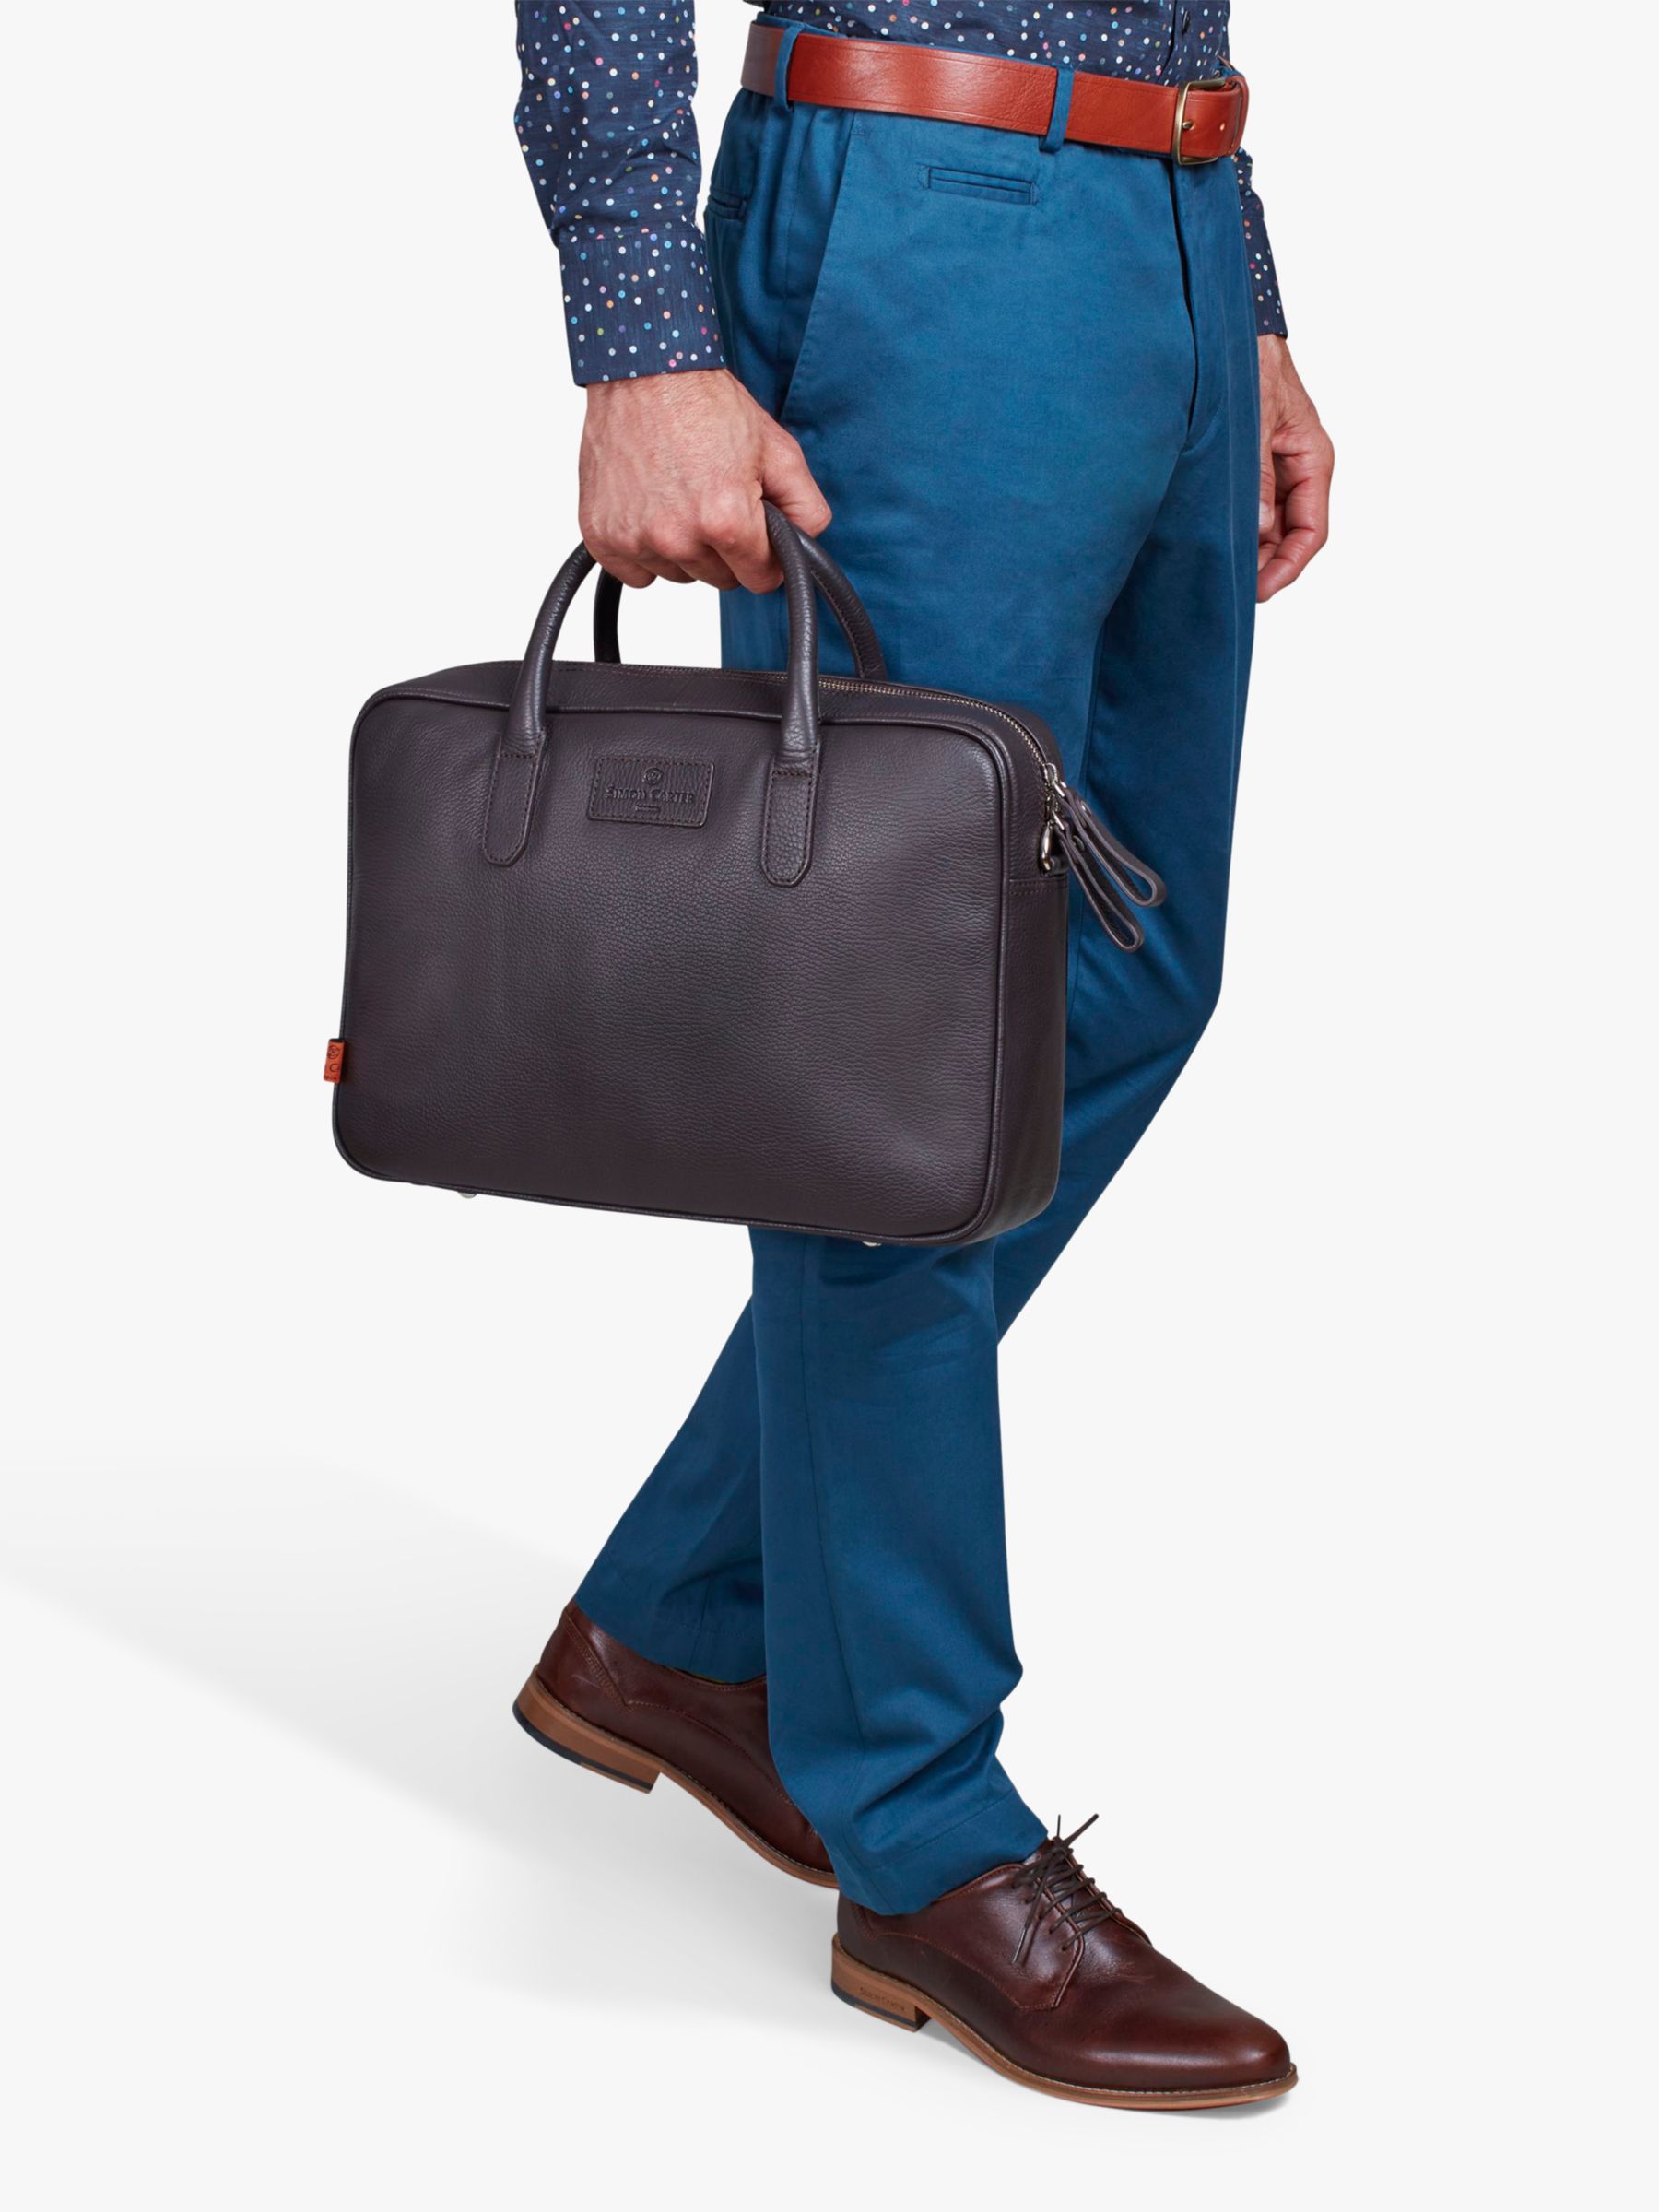 Simon Carter Hove Leather Laptop Bag, Brown at John Lewis & Partners